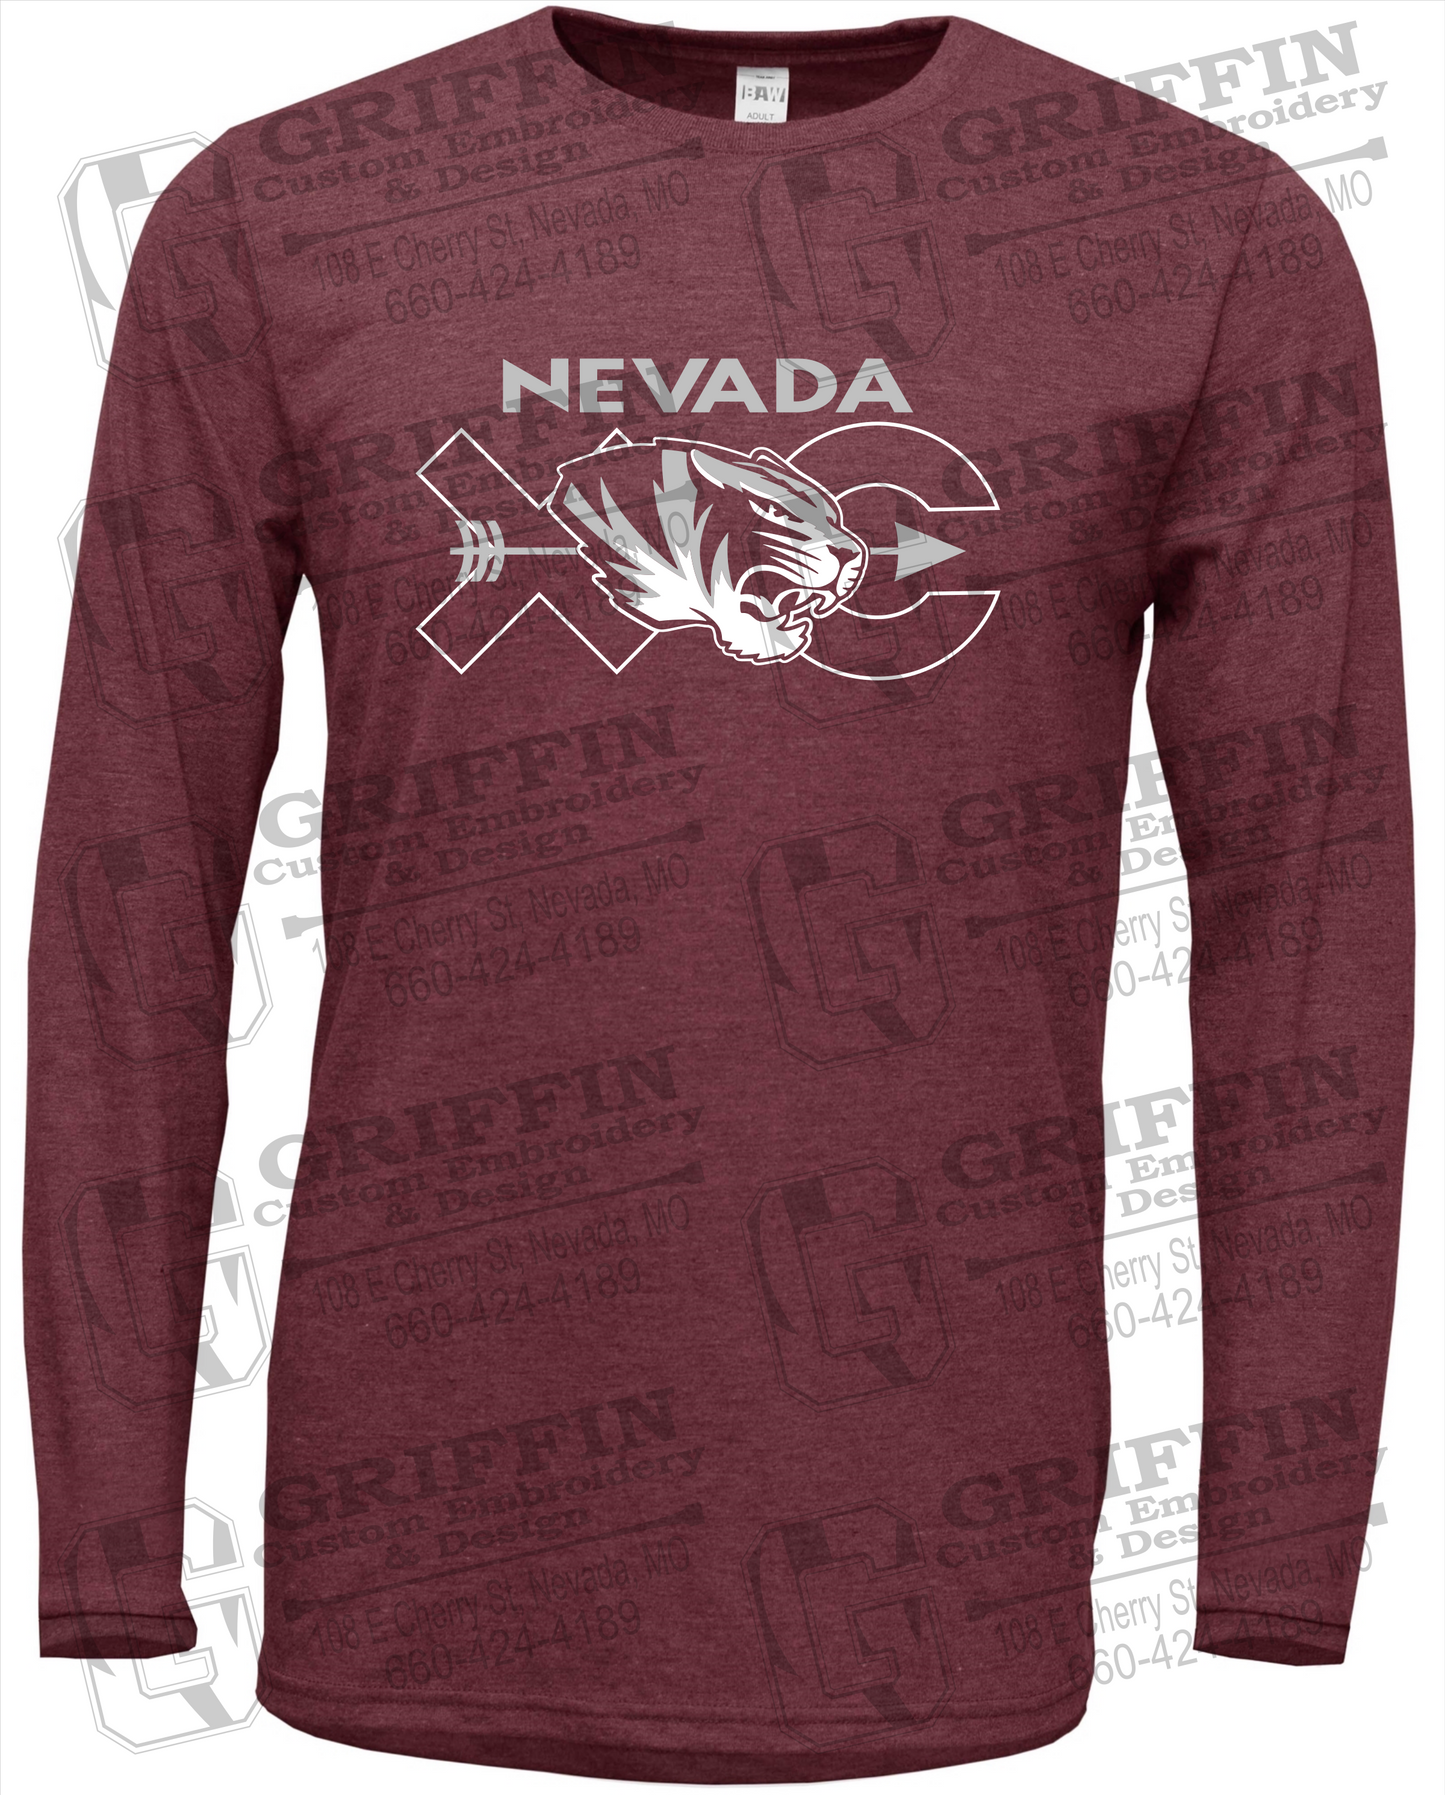 Soft-Tek Long Sleeve T-Shirt - Cross Country - Nevada Tigers 23-T